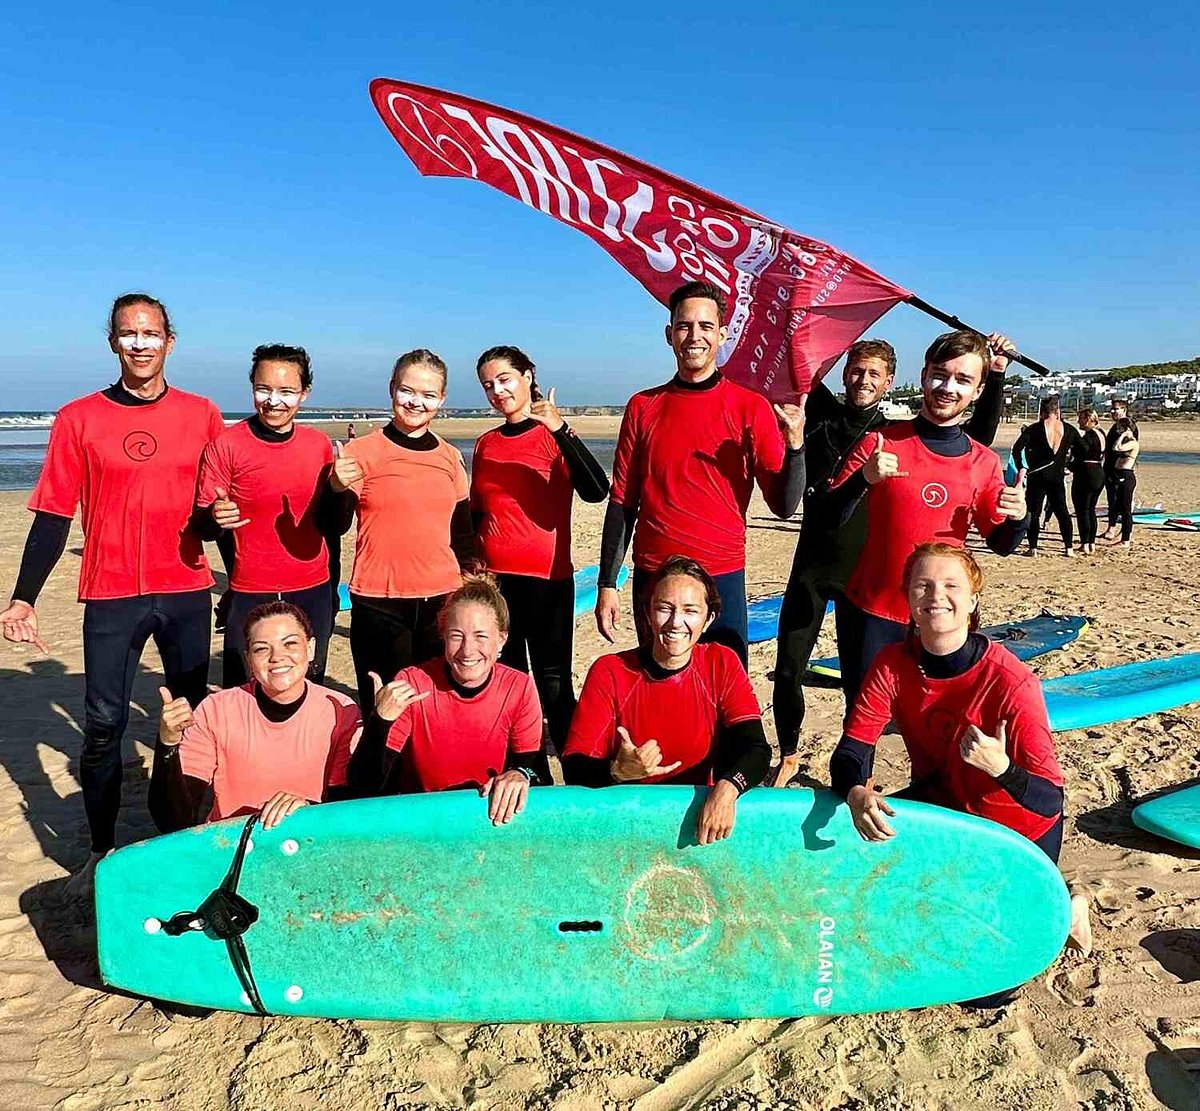 Beach Apartments Deluxe – Surf School Conil